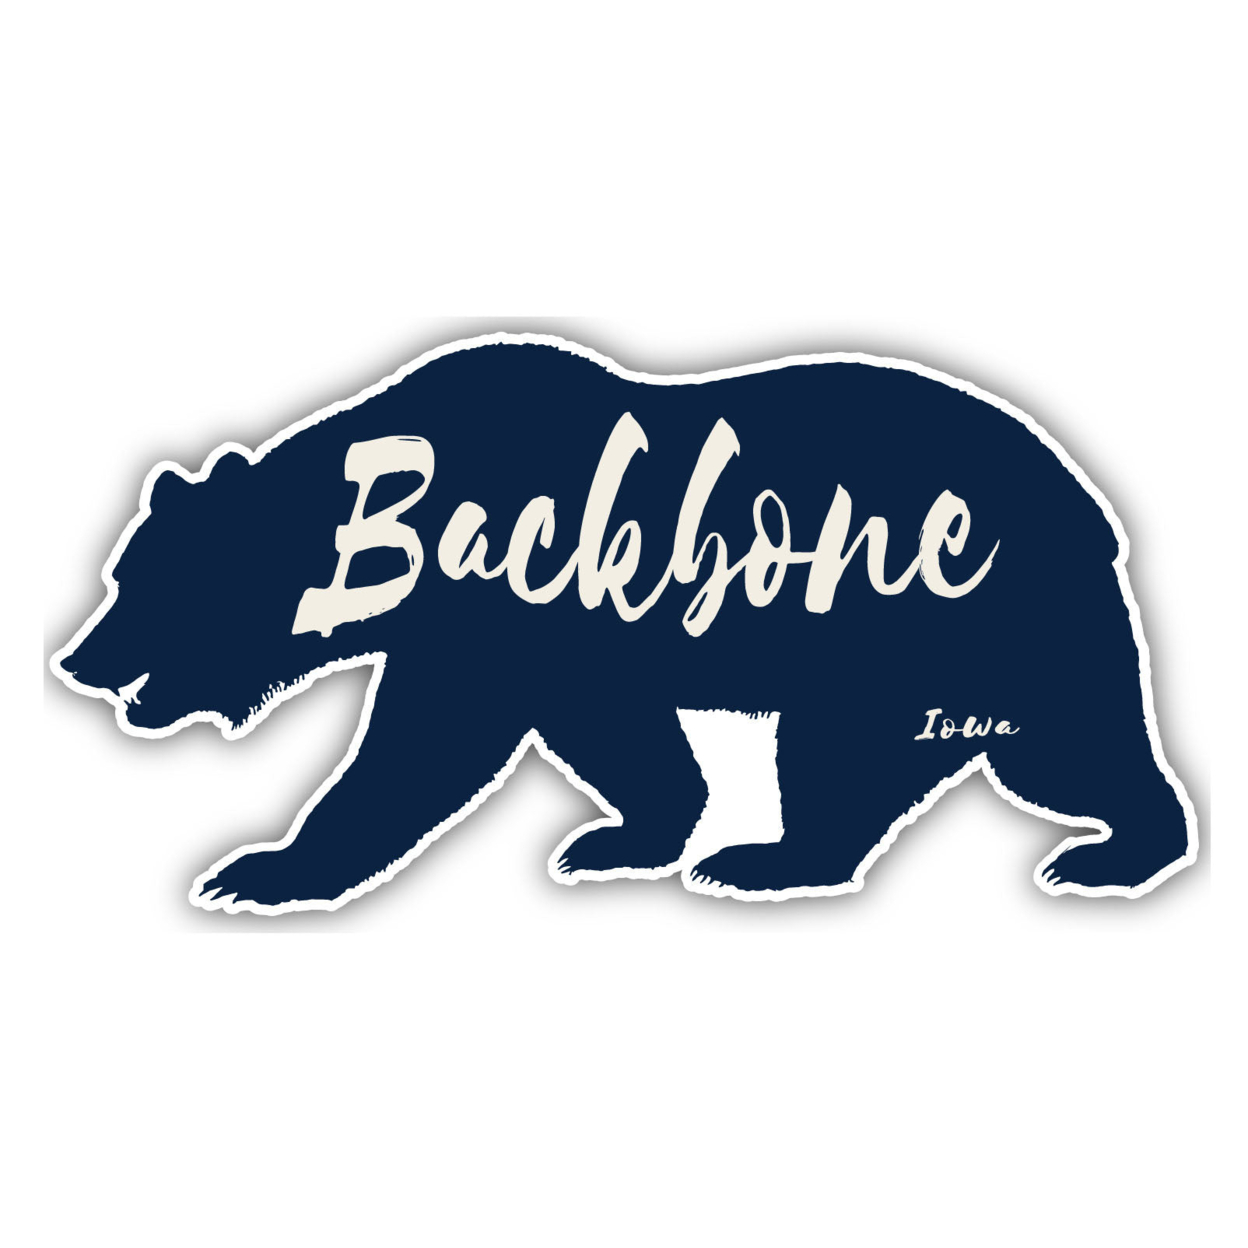 Backbone Iowa Souvenir Decorative Stickers (Choose Theme And Size) - Single Unit, 10-Inch, Bear